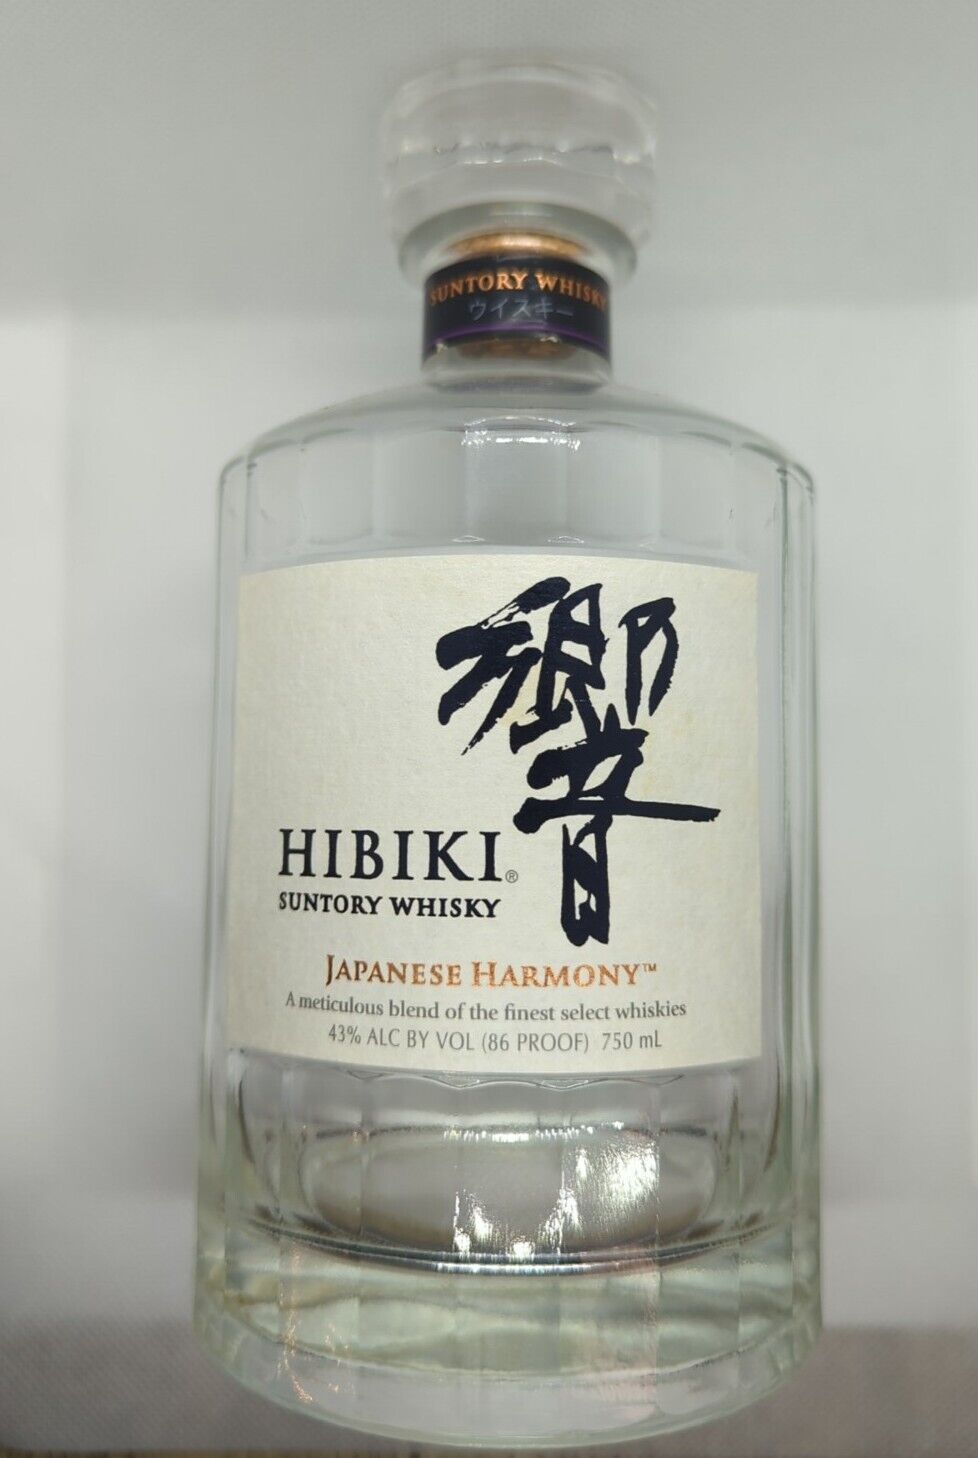 Suntory Hibiki Japanese Harmony Whisky Empty Bottle Design Decor Collector’s